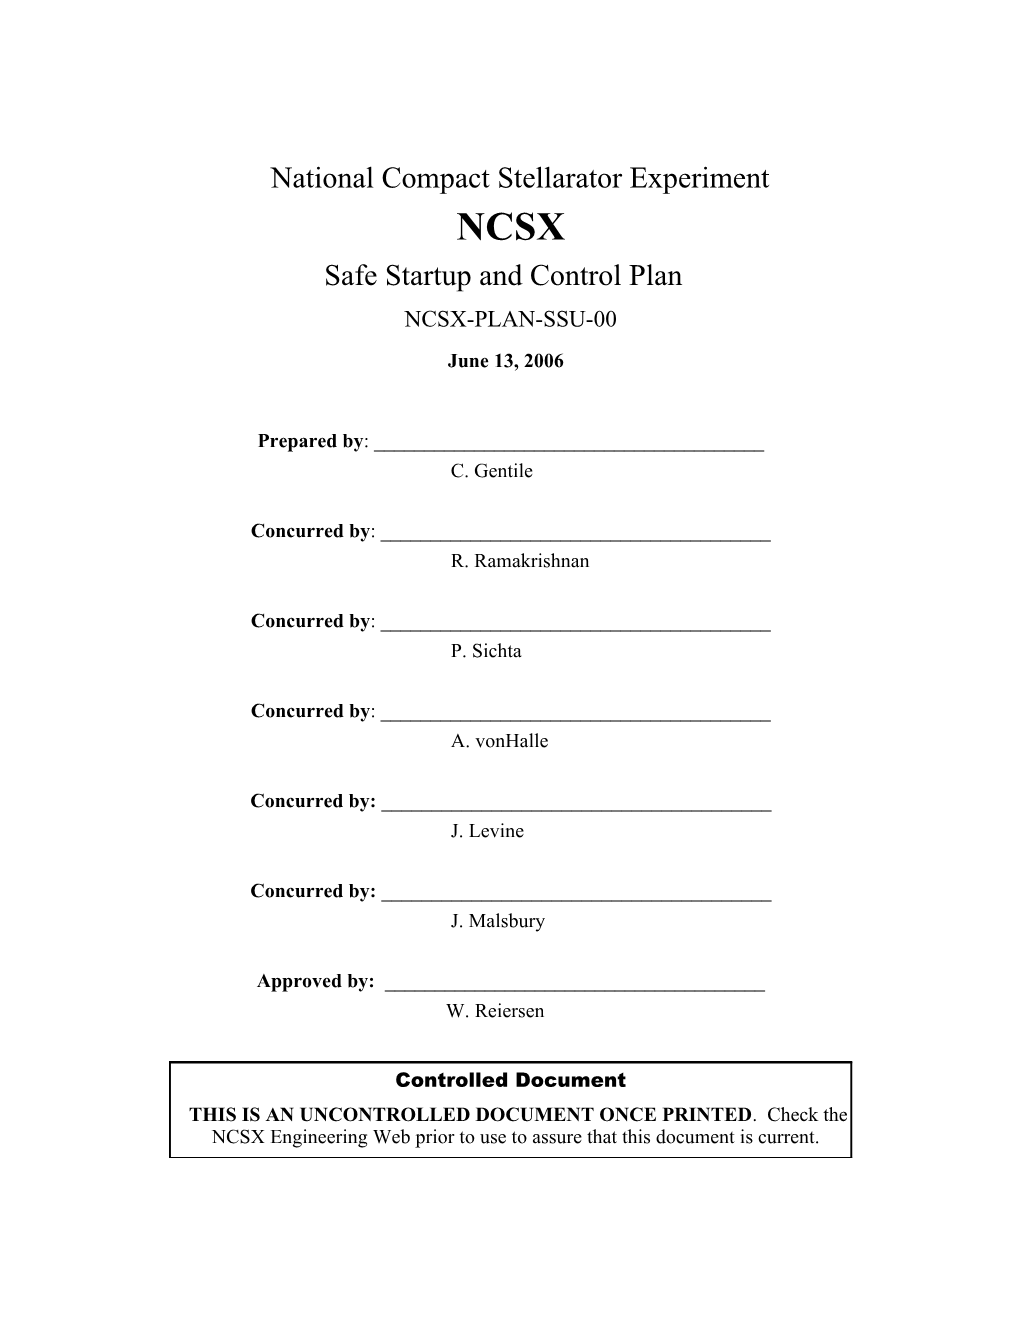 NSTX Documentation & Records Plan s1